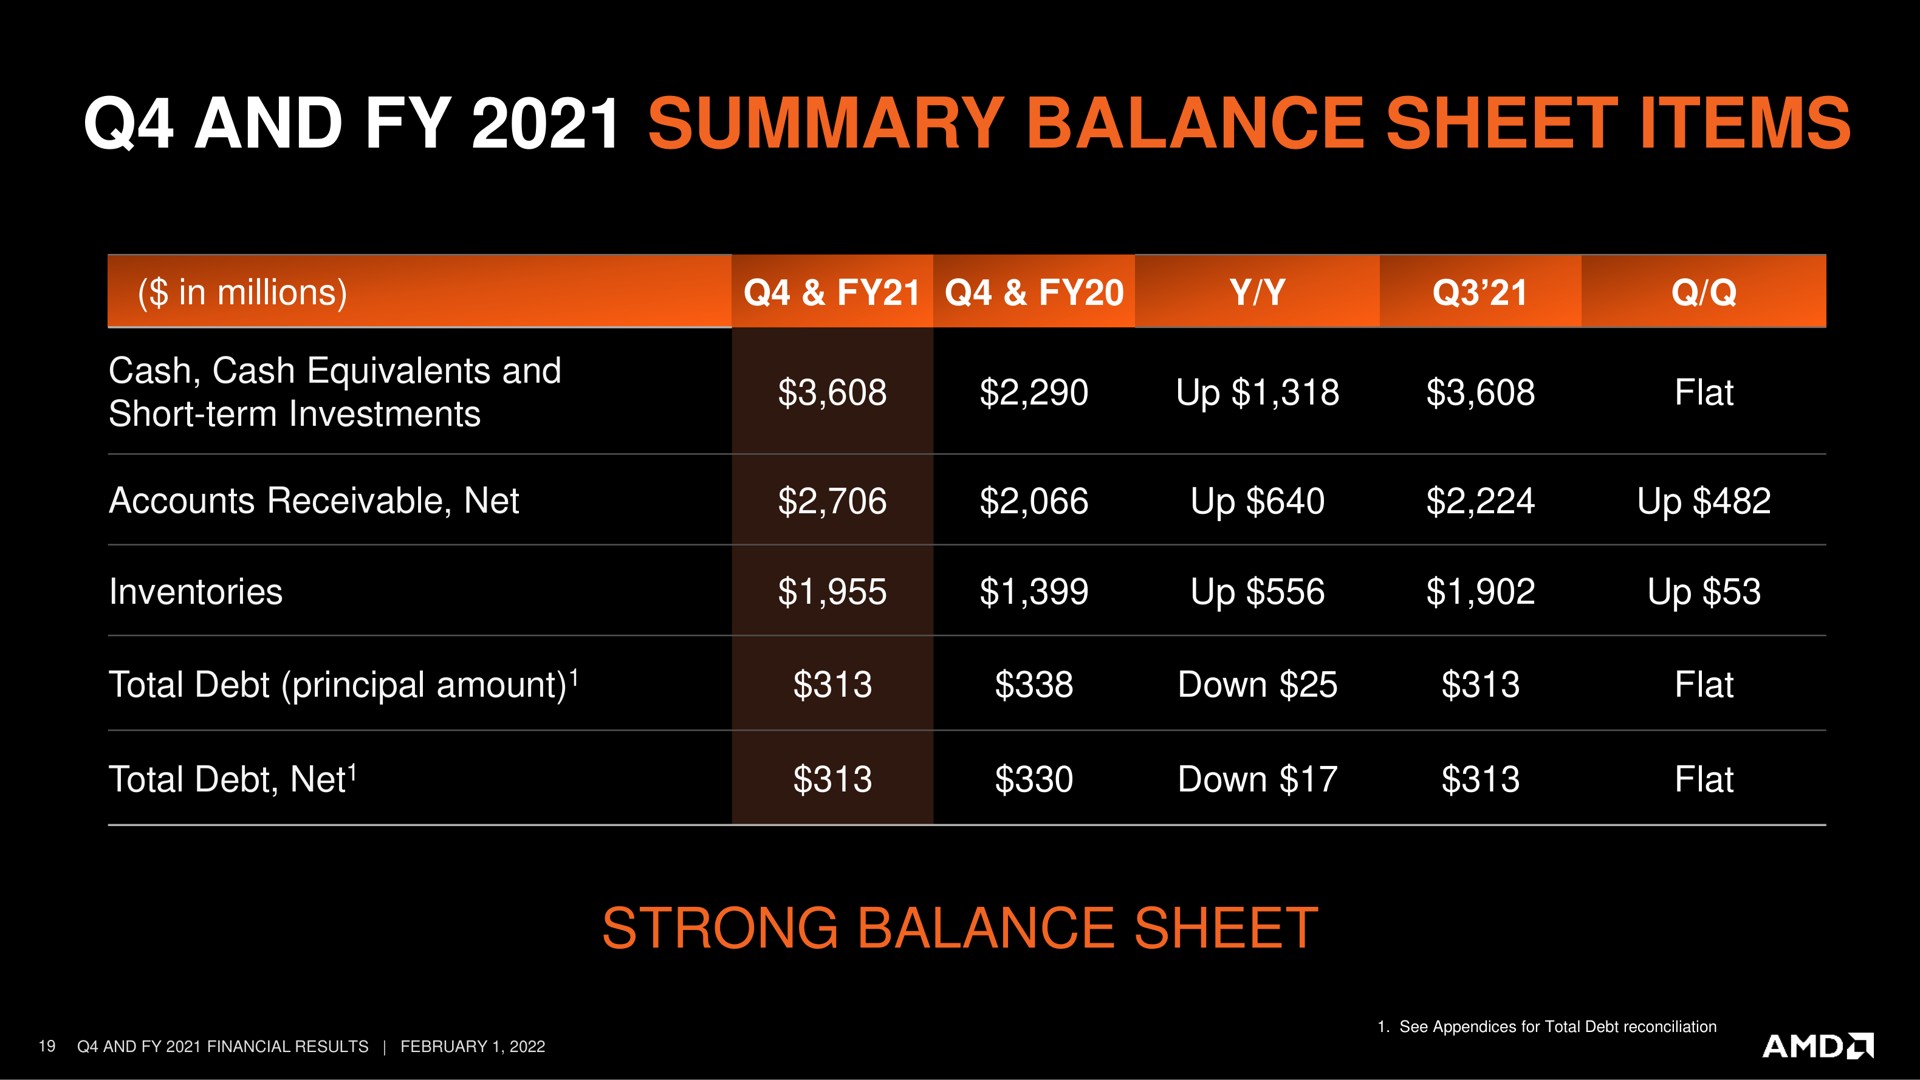 and summary balance sheet items strong | AMD